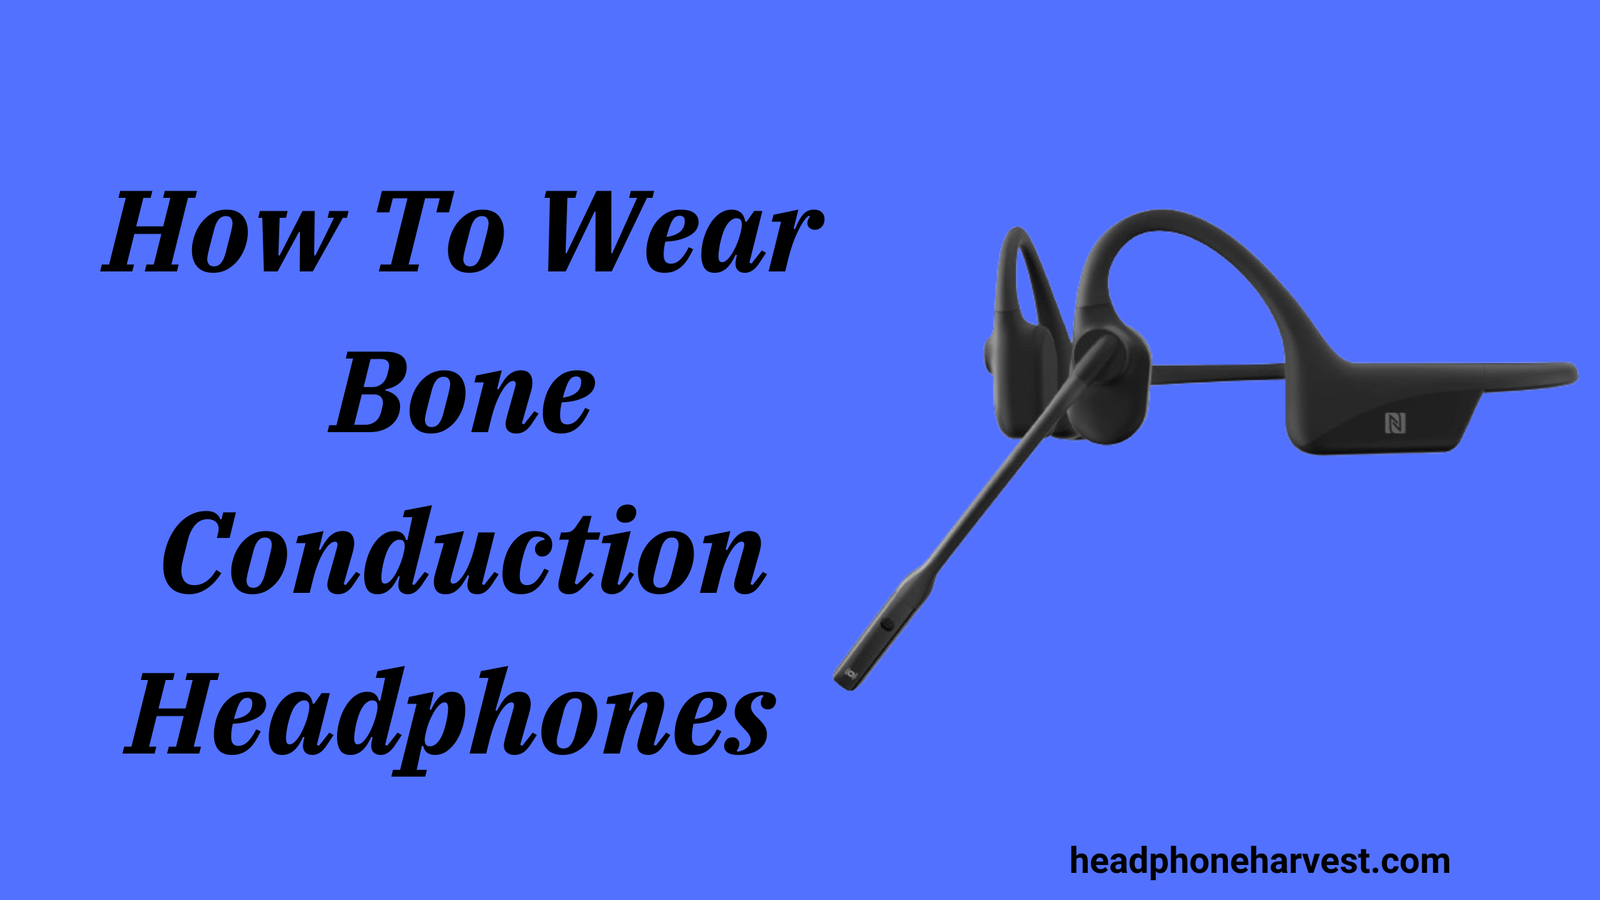 How To Wear Bone Conduction Headphones